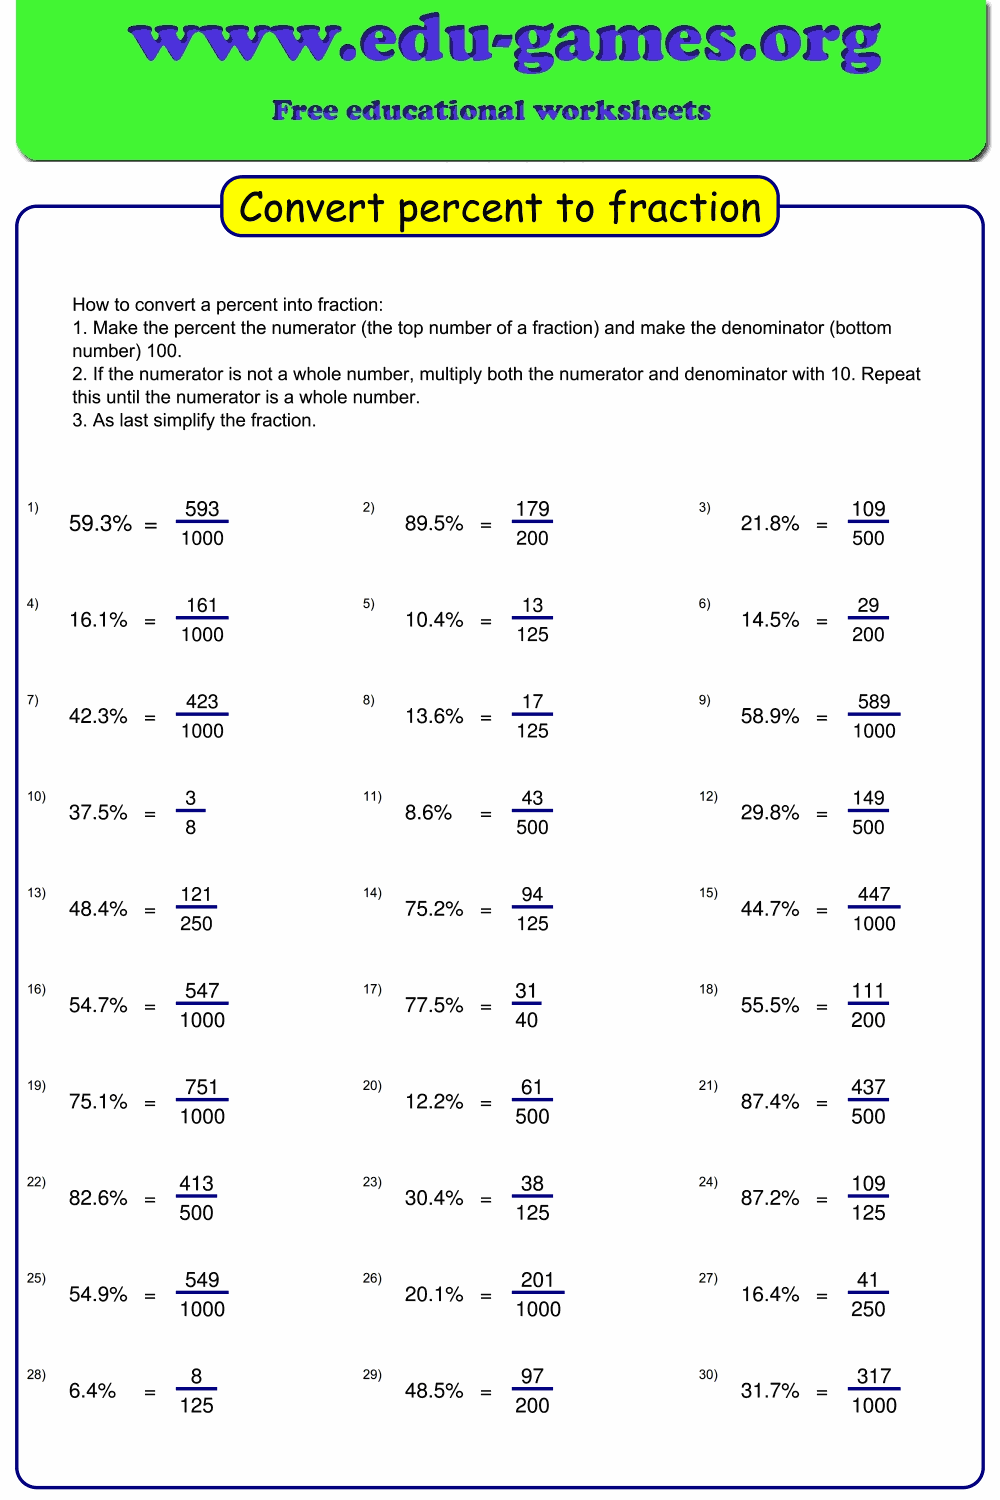 Convert percent to fraction worksheet maker | Free Printable Worksheets